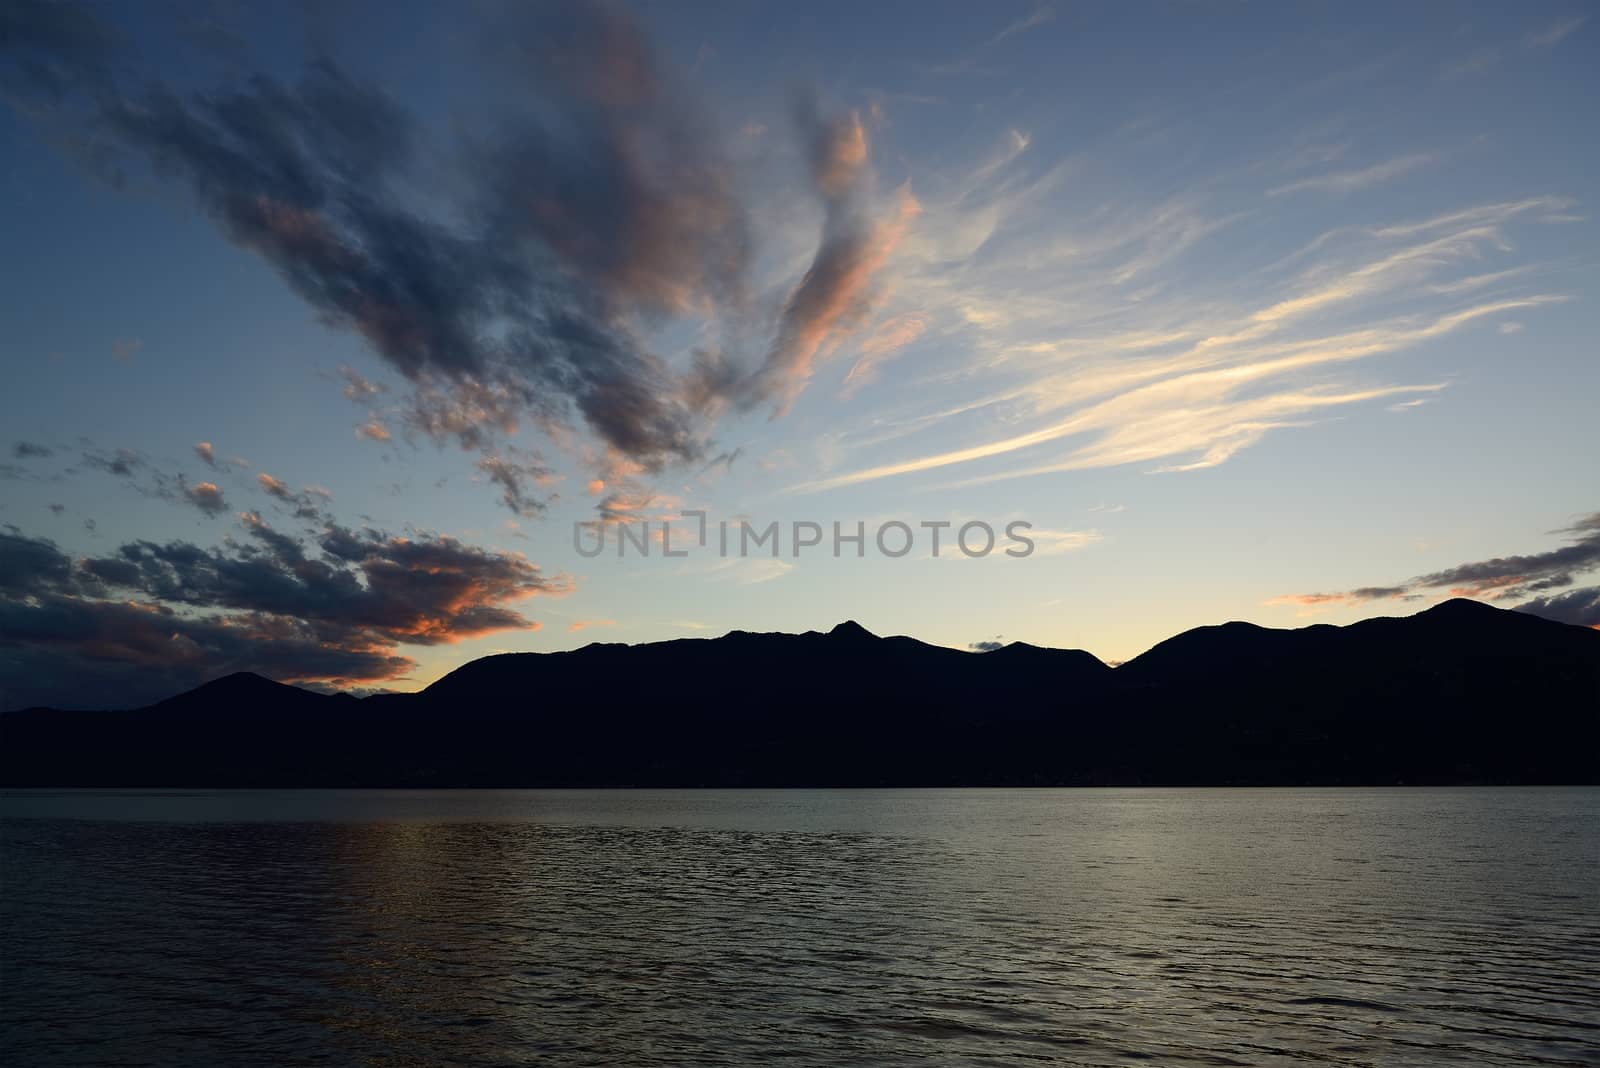 Maggiore lake, sundown from lakefront of Luino